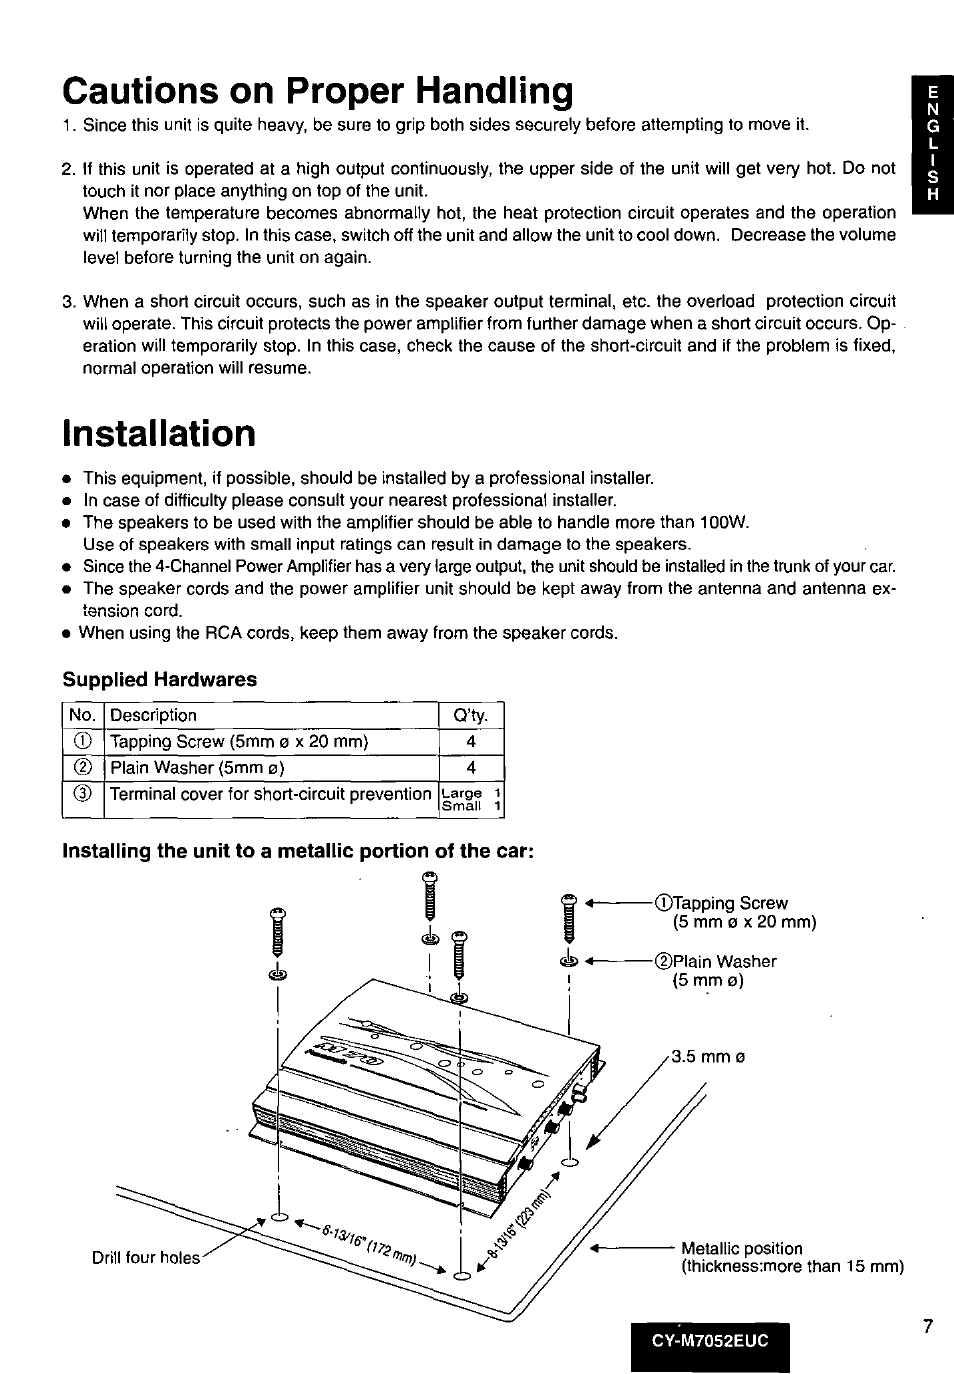 Cautions on proper handling, Installation, Supplied hardwares | Panasonic stereo/mono bridgeable power amplifier cy-m7052euc Manuel d'utilisation | Page 7 / 20